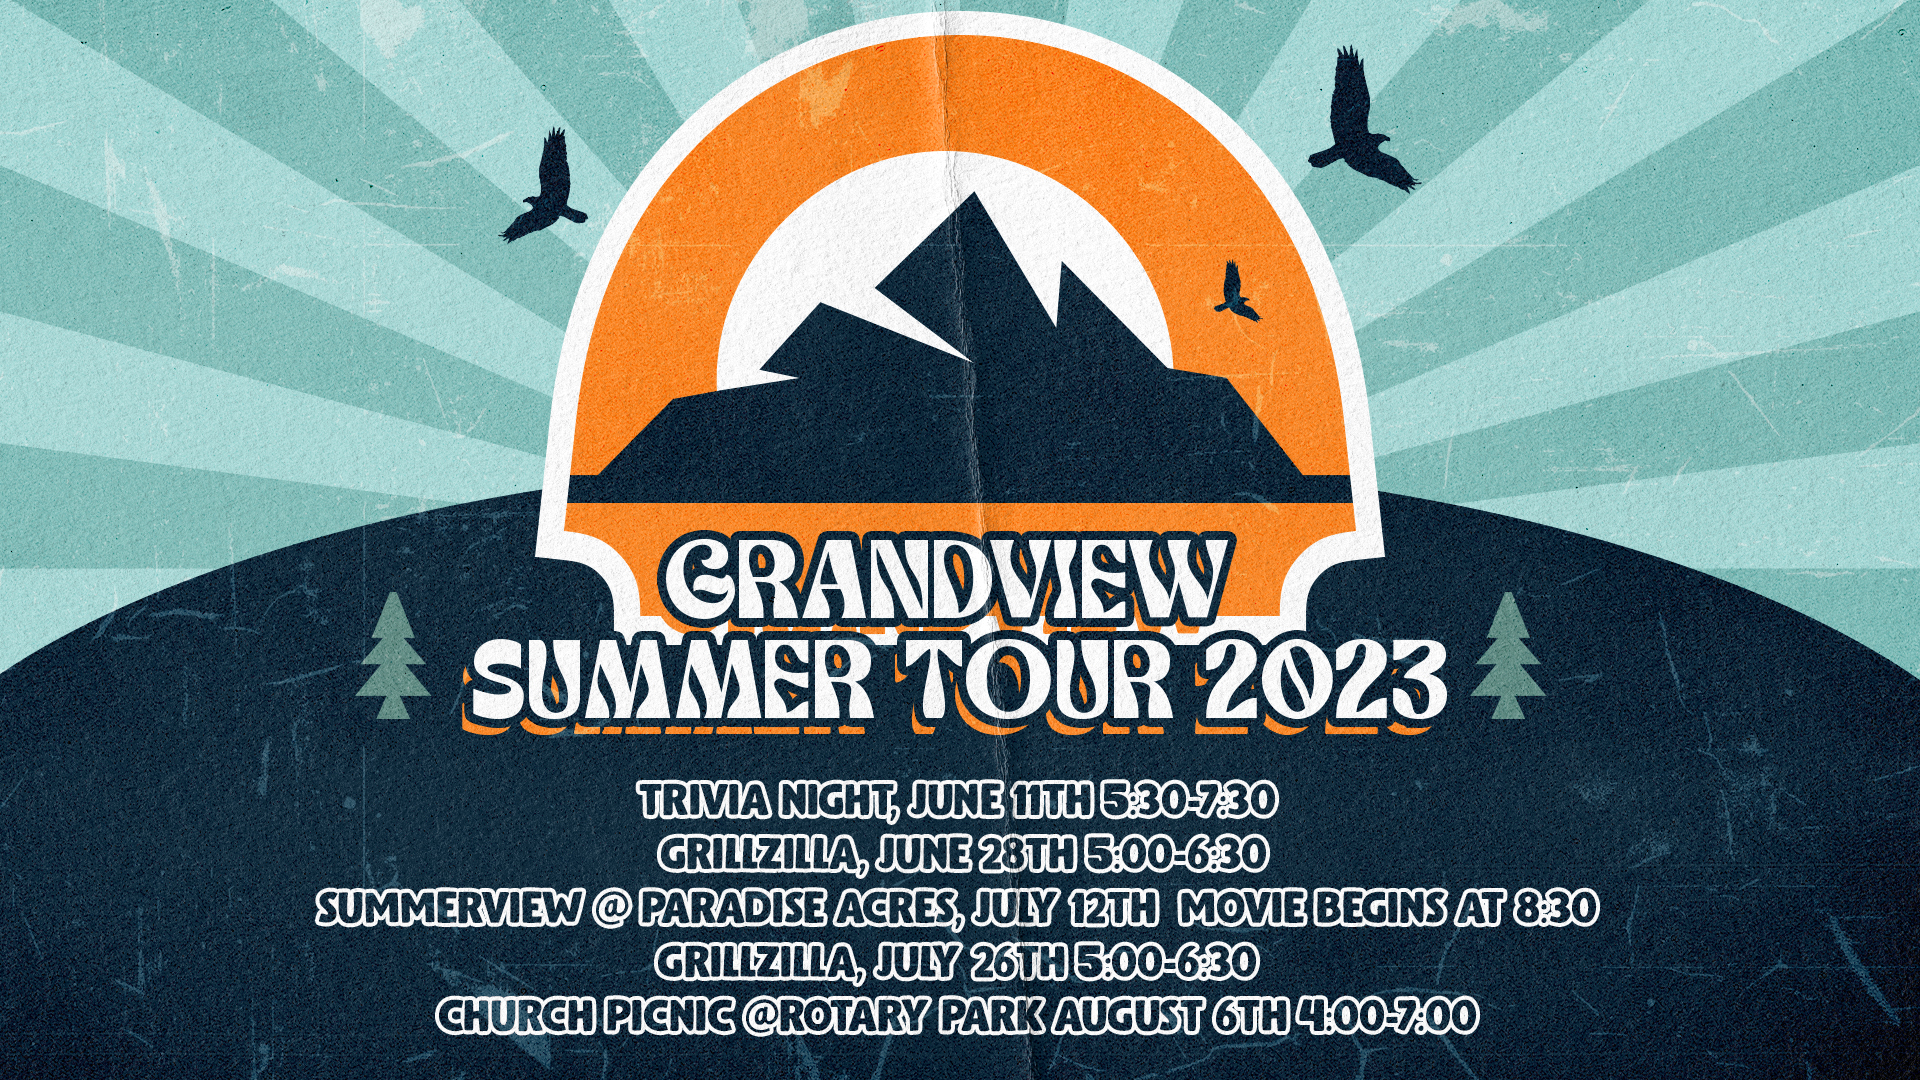 Grandview Summer Tour 2023 - 2b